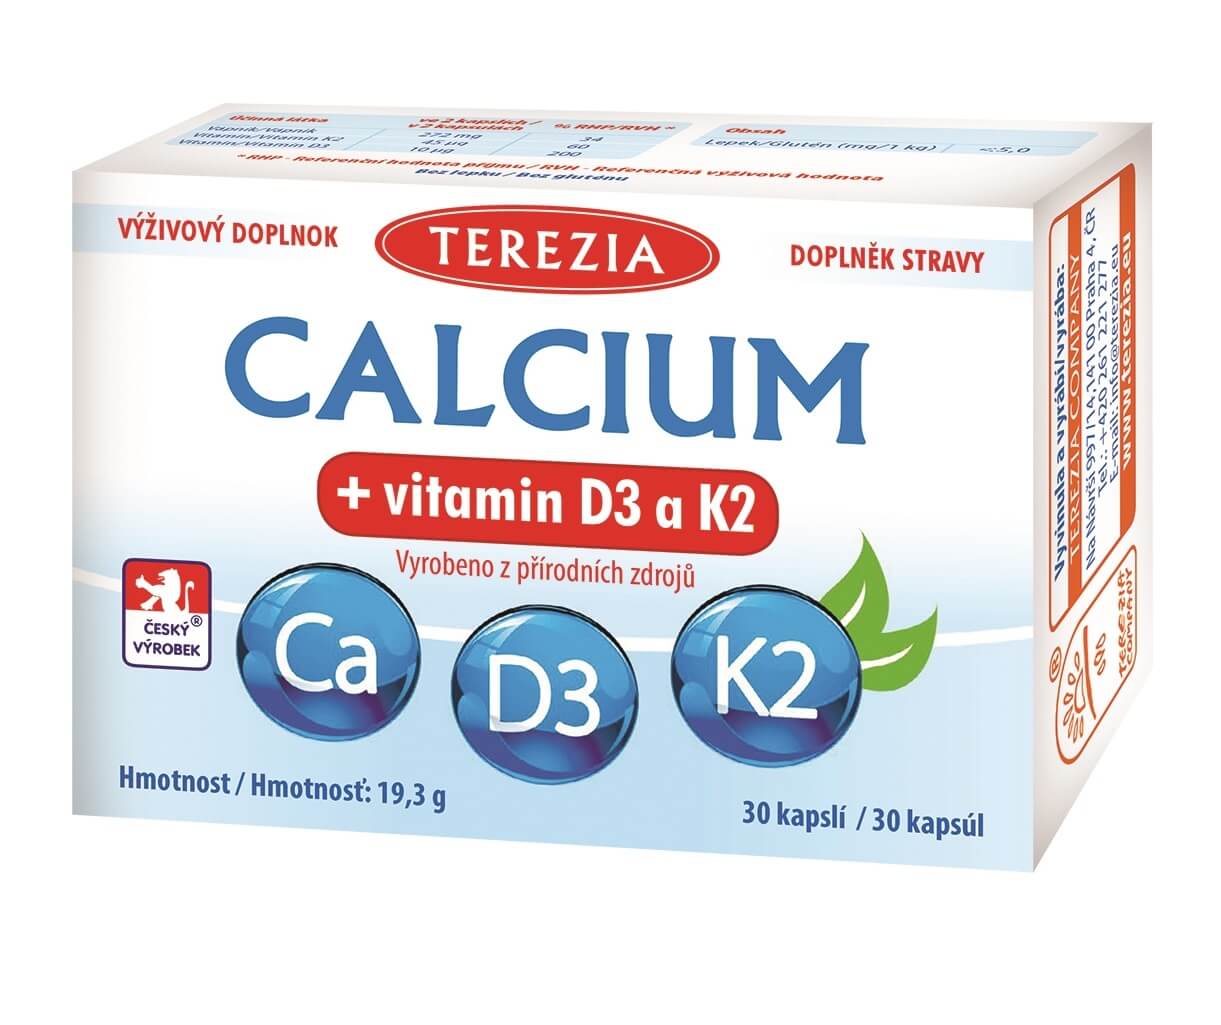 Zobrazit detail výrobku Terezia Company Calcium + vitamin D3 a K2 30 kapslí